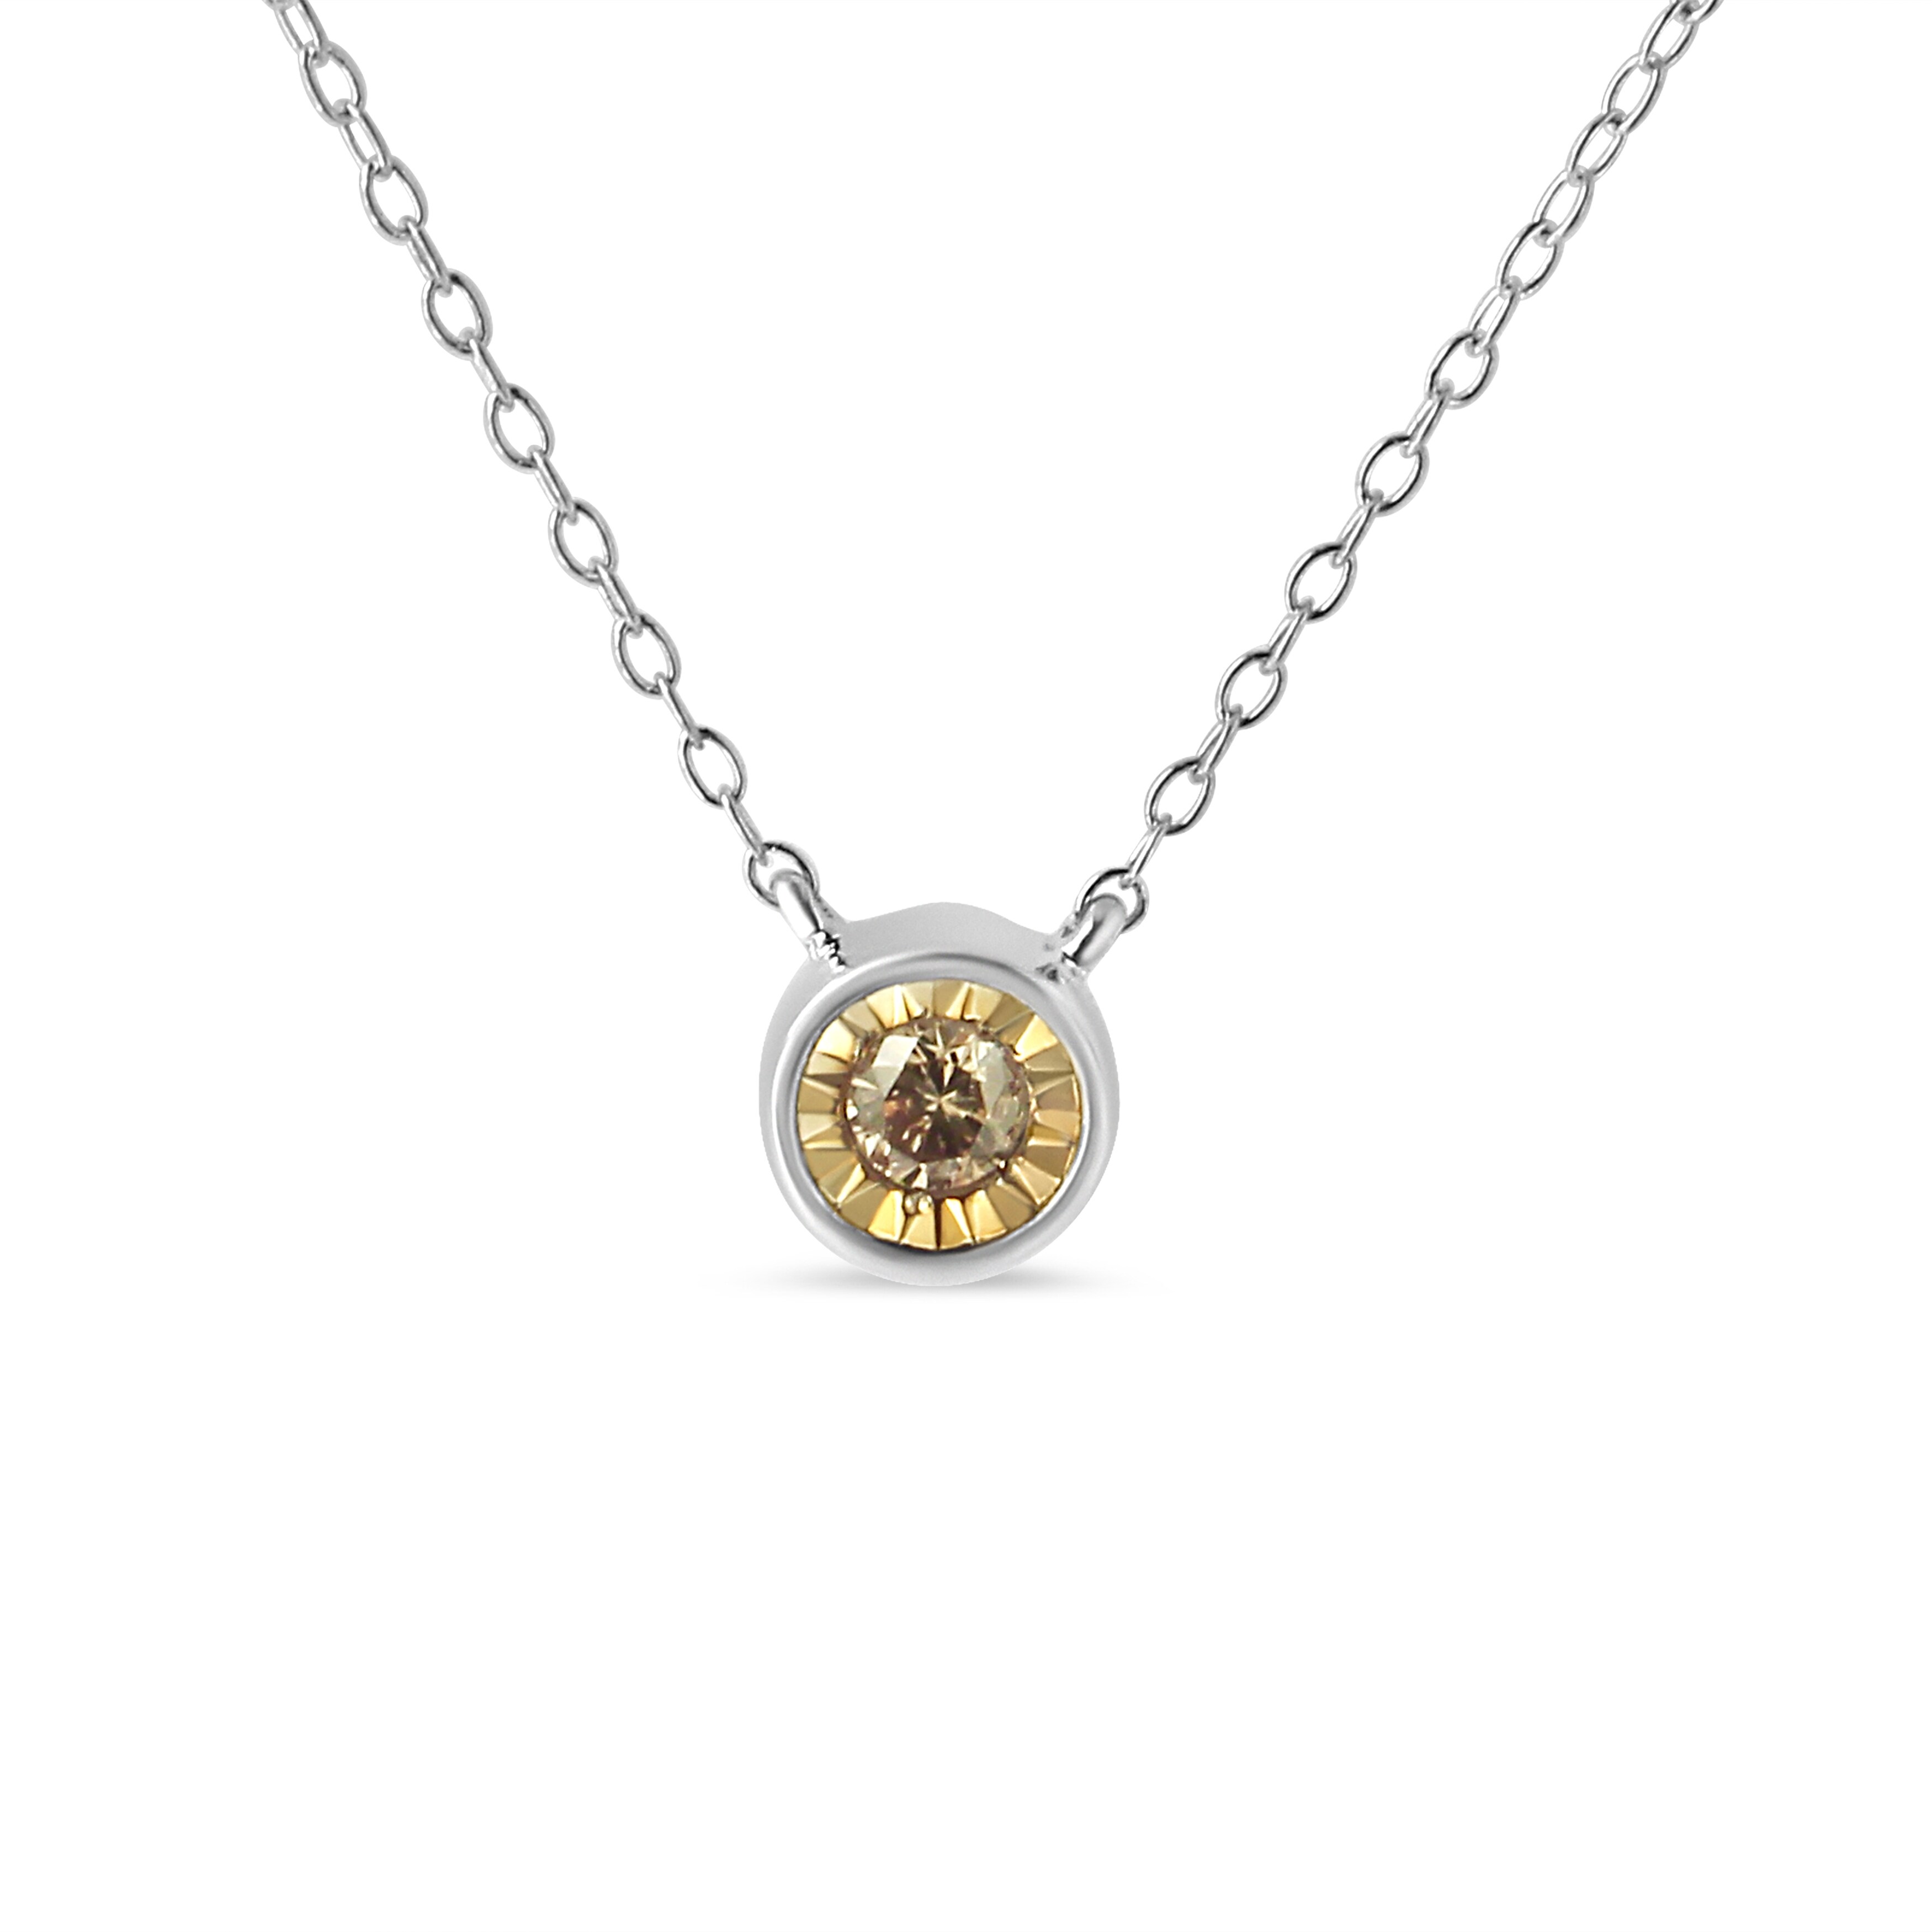 Sterling Silver Champaign and White Diamond Swirl Pendant-Necklace